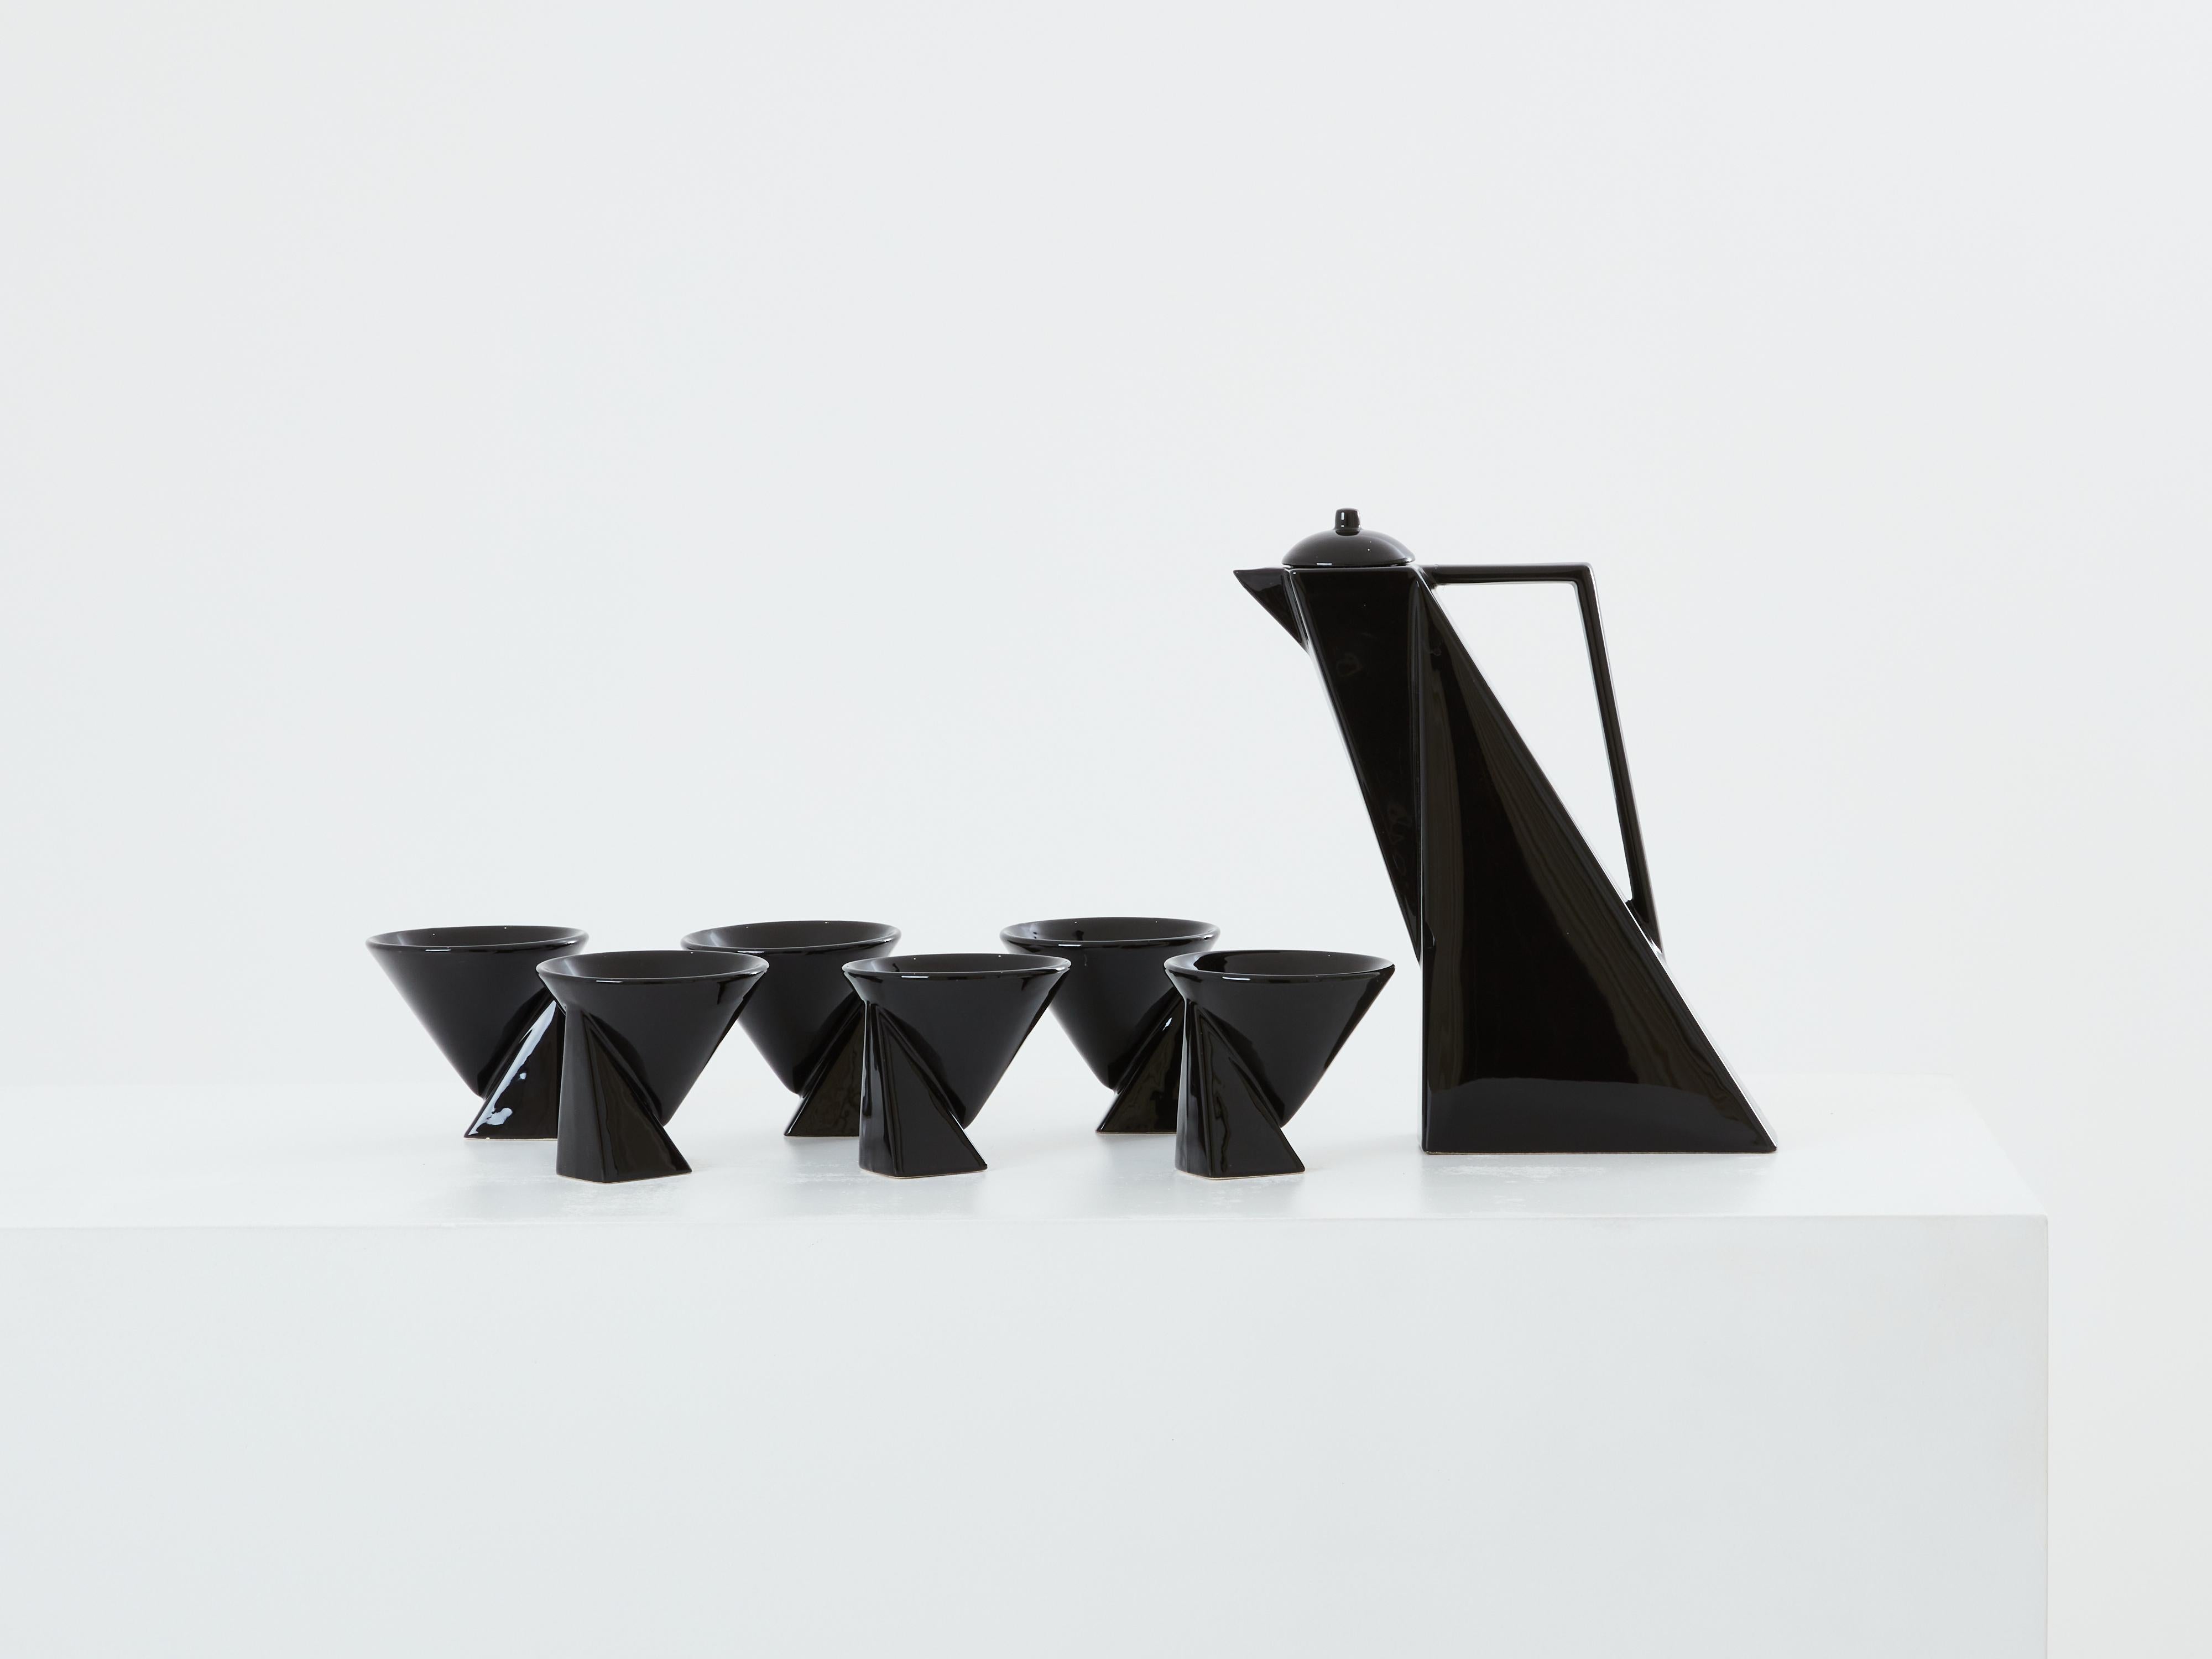 Pierre Casenove for Studio Salins glazed ceramic coffee set 1980s  For Sale 1